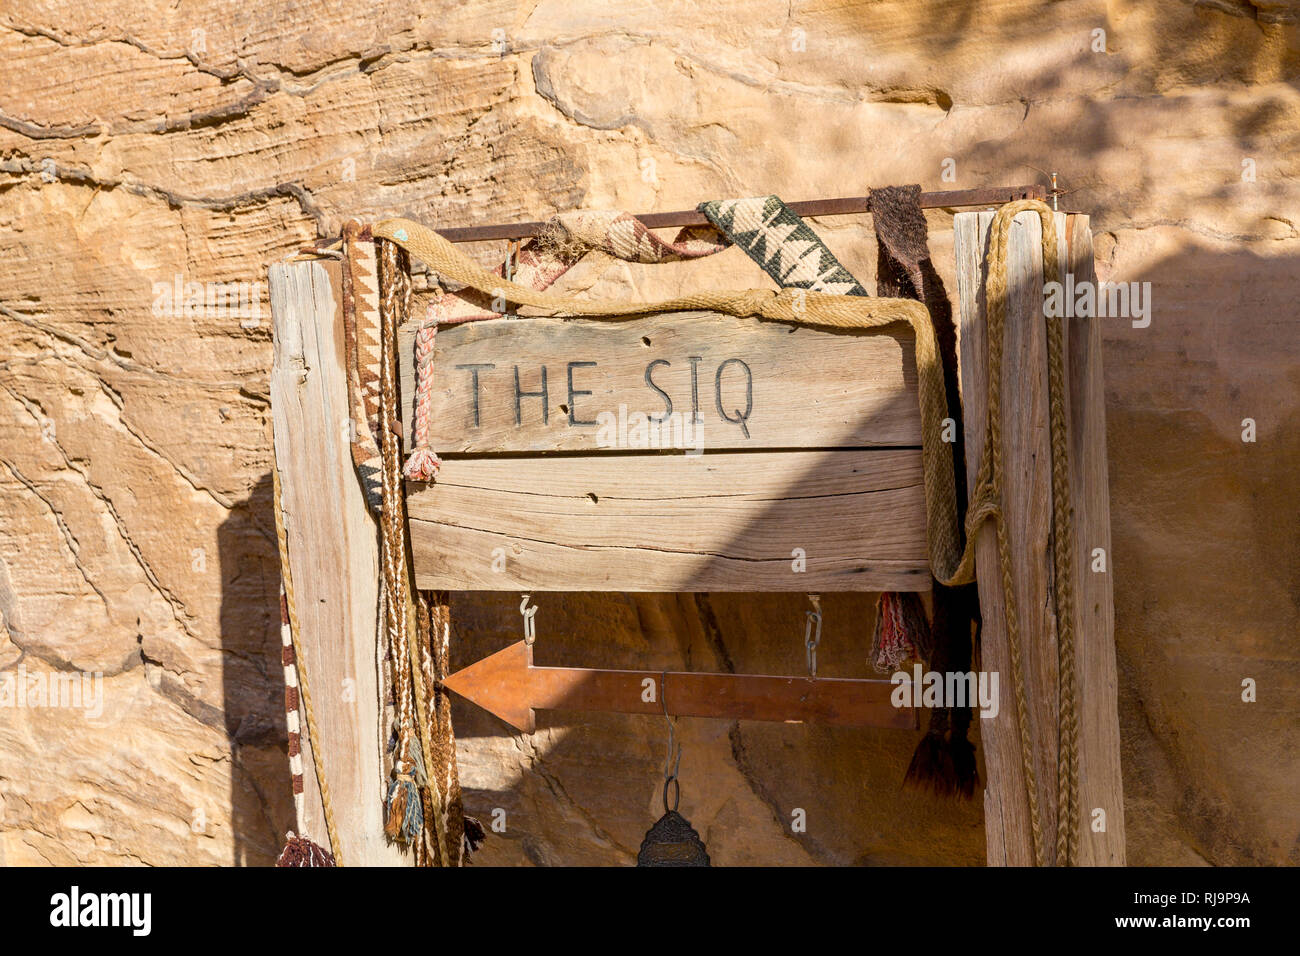 Eingangsschild, Der Sik, The Siq, Felsschlucht, Petra, Wadi Musa, Nabatäer Hauptstadt, UNESCO Weltkulturerbe, Jordanien, Asien Stock Photo